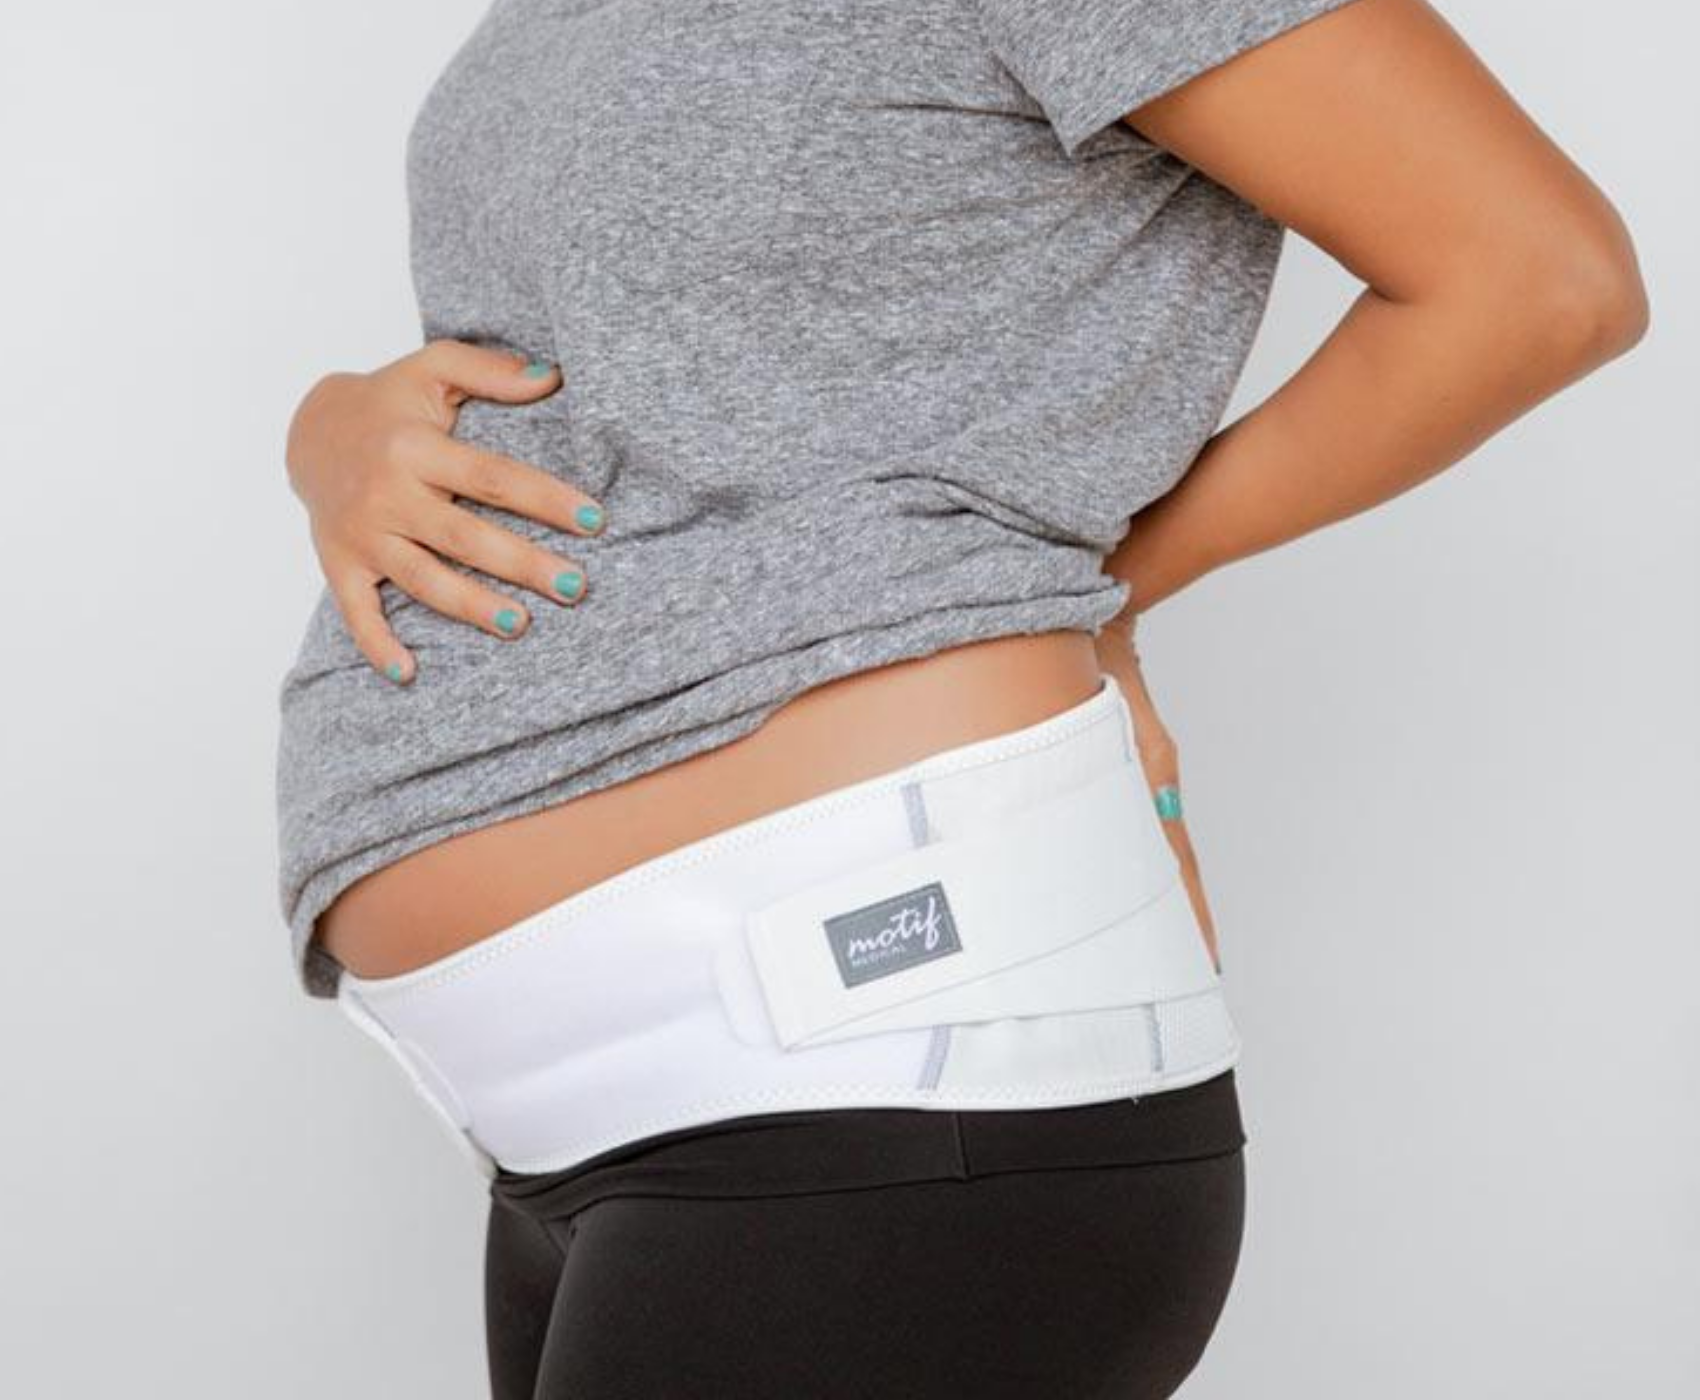 MommaWrap Pregnancy Belt, Maternity Belly Band - Pregnancy Must